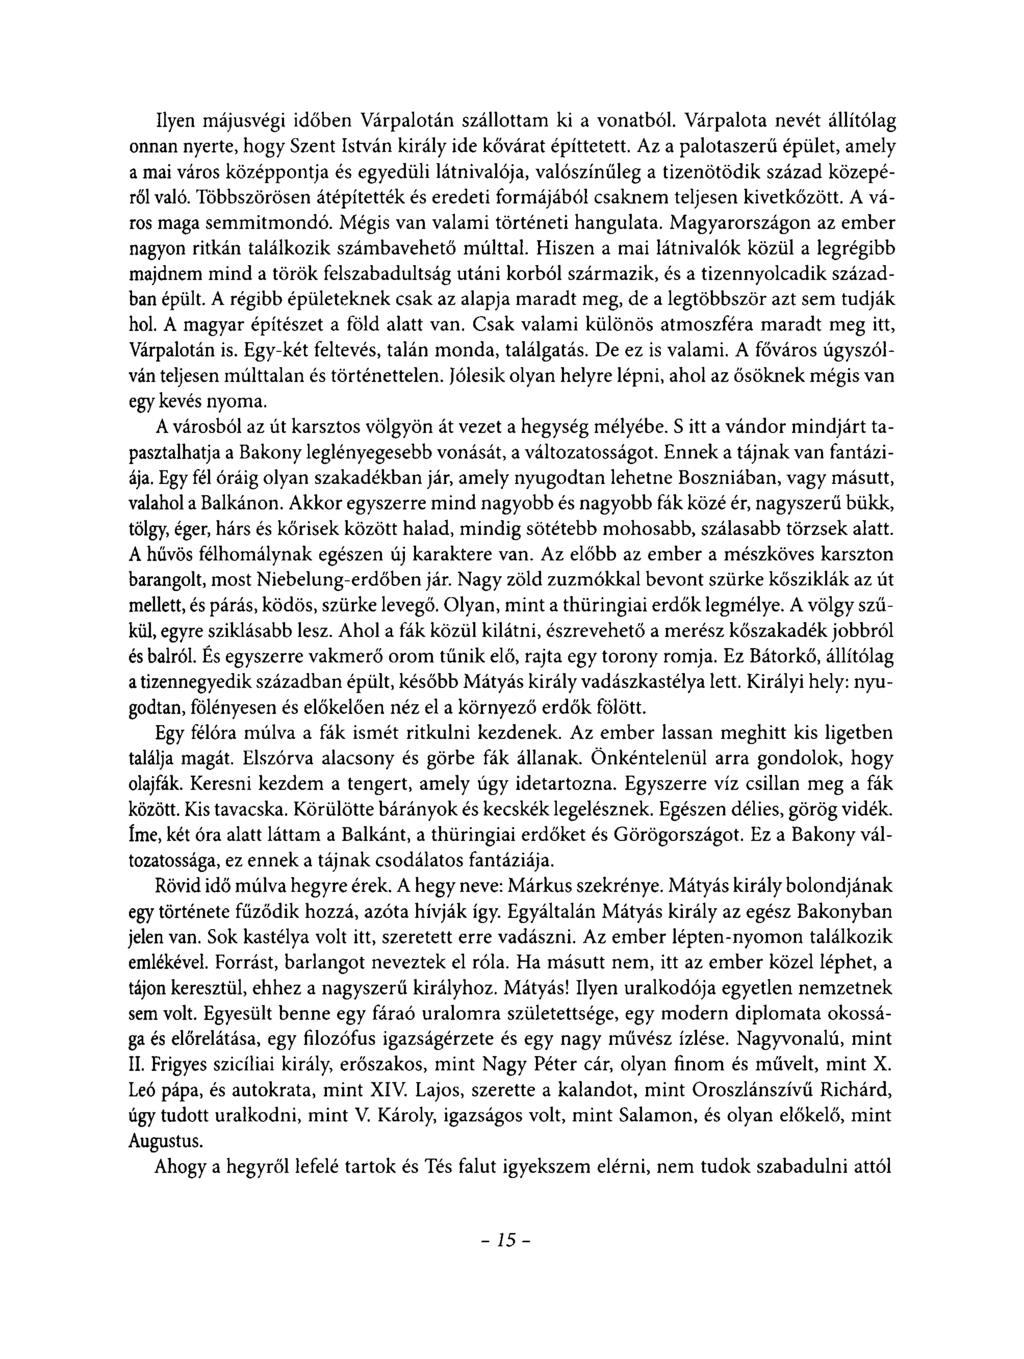 The Project Gutenberg eBook of Hazai rejtelmek (2. kötet) by Lajos Kuthy